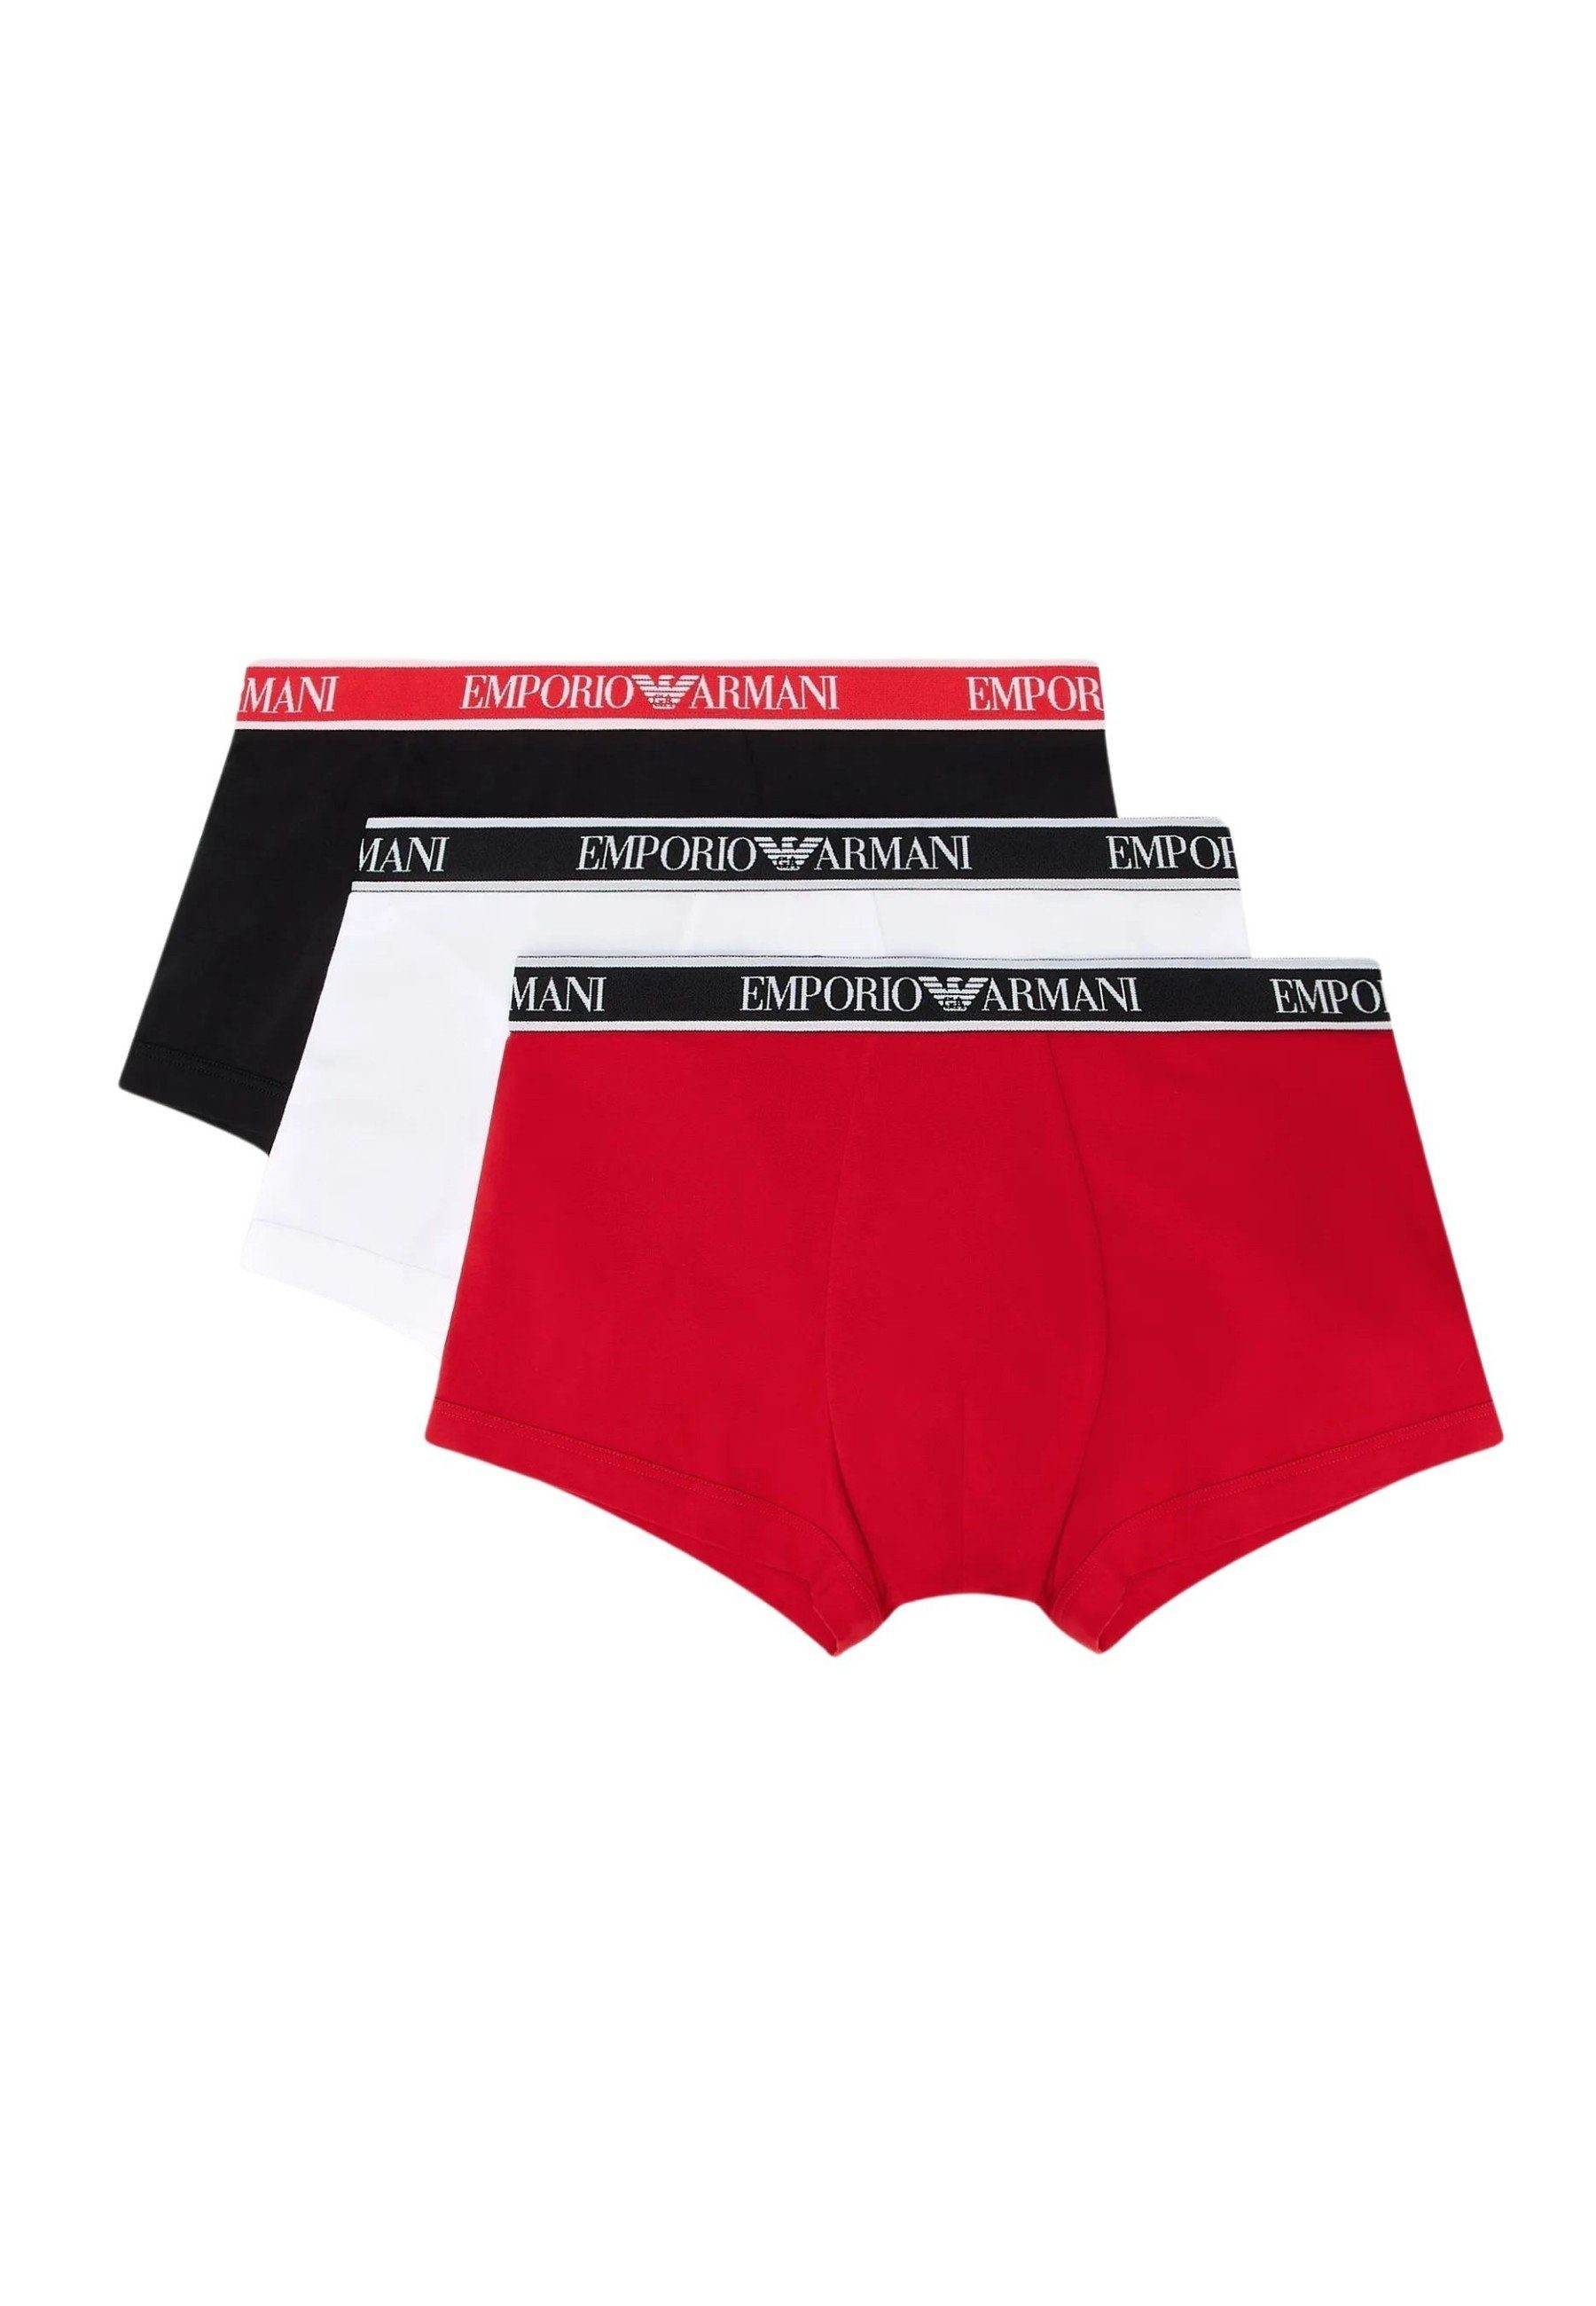 Emporio Armani Pack (3-St) Boxershorts Weiß/Schwarz/Rot 3 Trunks Knit Shorts